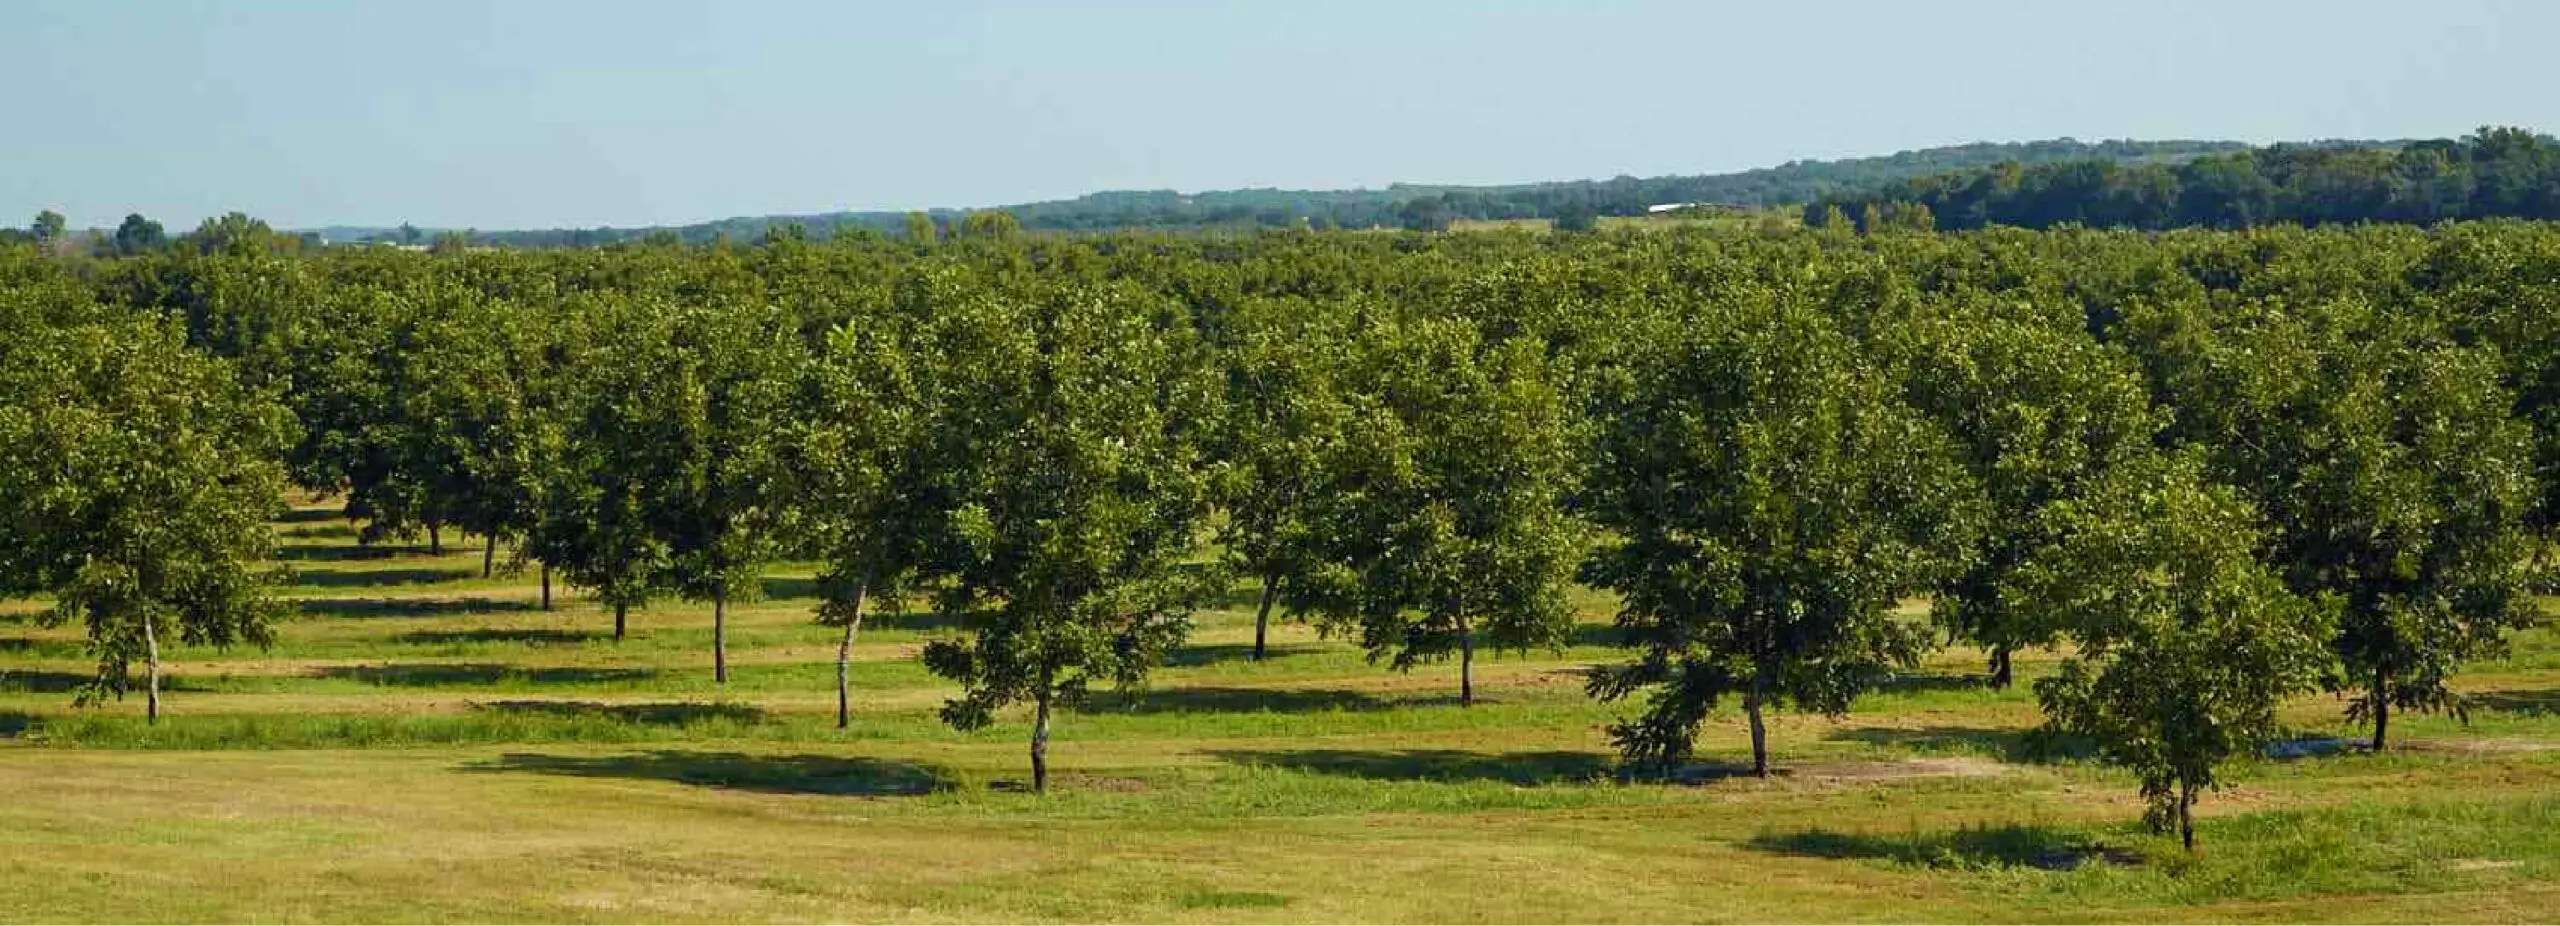 Field Full of Pecan Trees